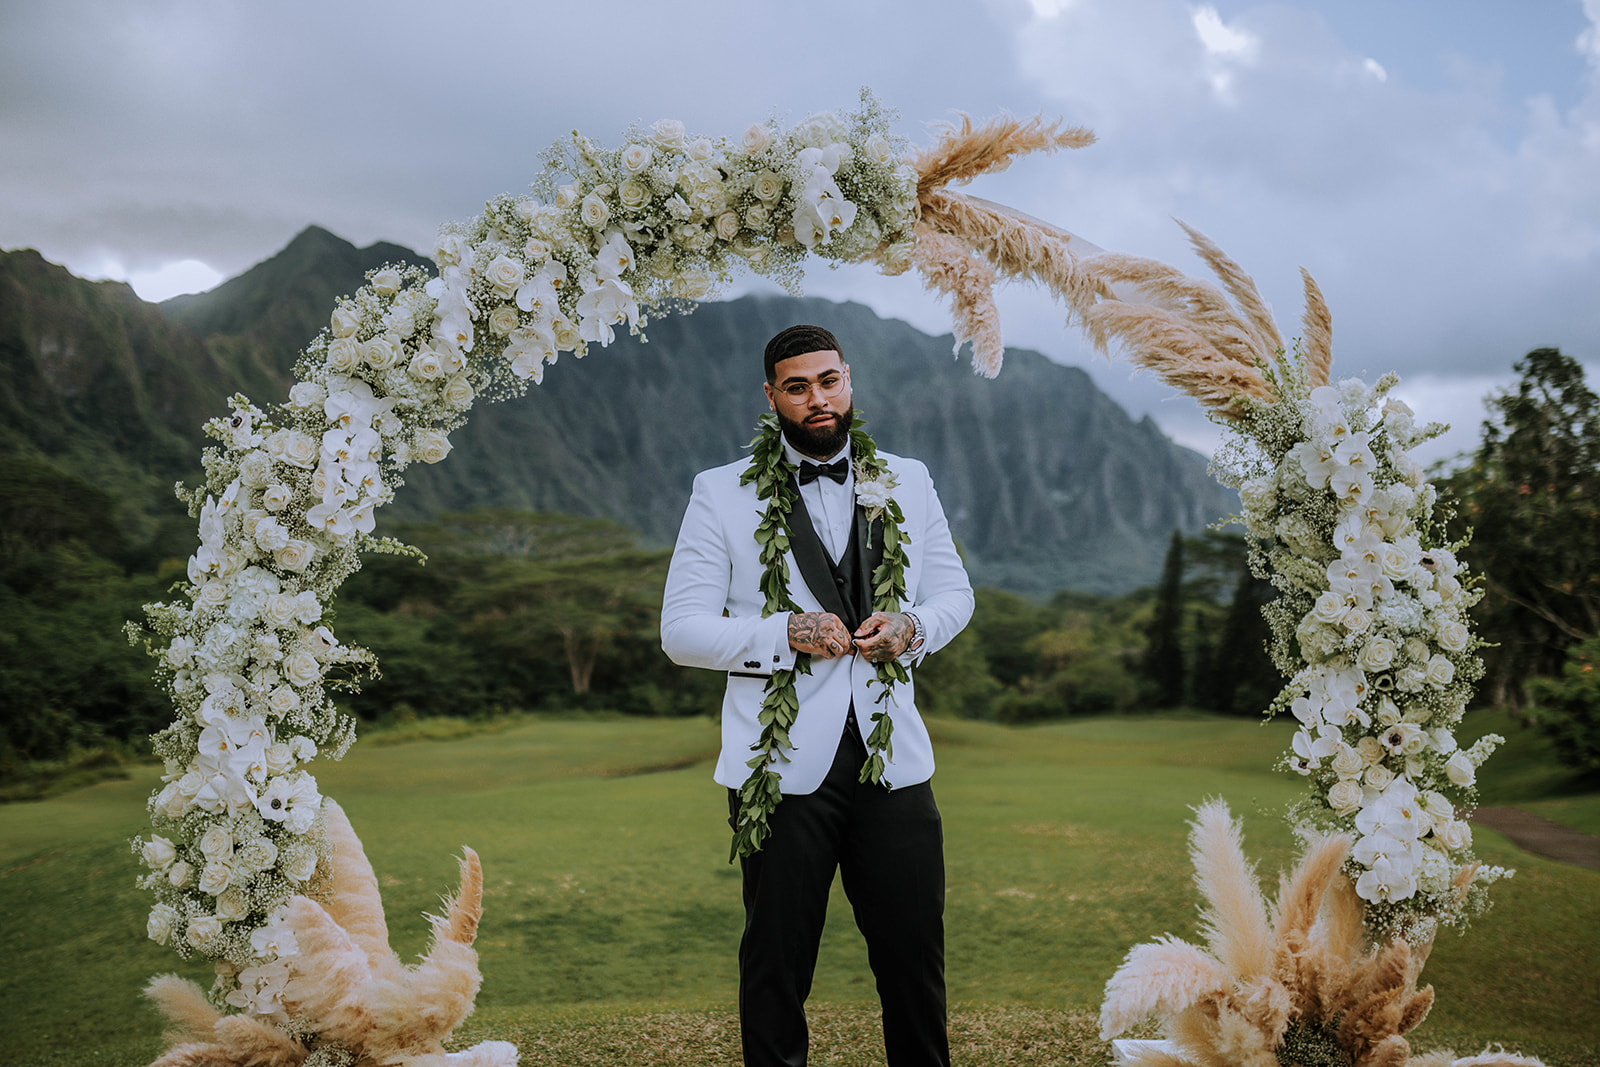 complete bride guide for Hawaii weddings, Oahu wedding photographer, luxury destination Hawaii wedding, wedding photographer Oahu Hawaii, Luxe tropical wedding, celebrity wedding